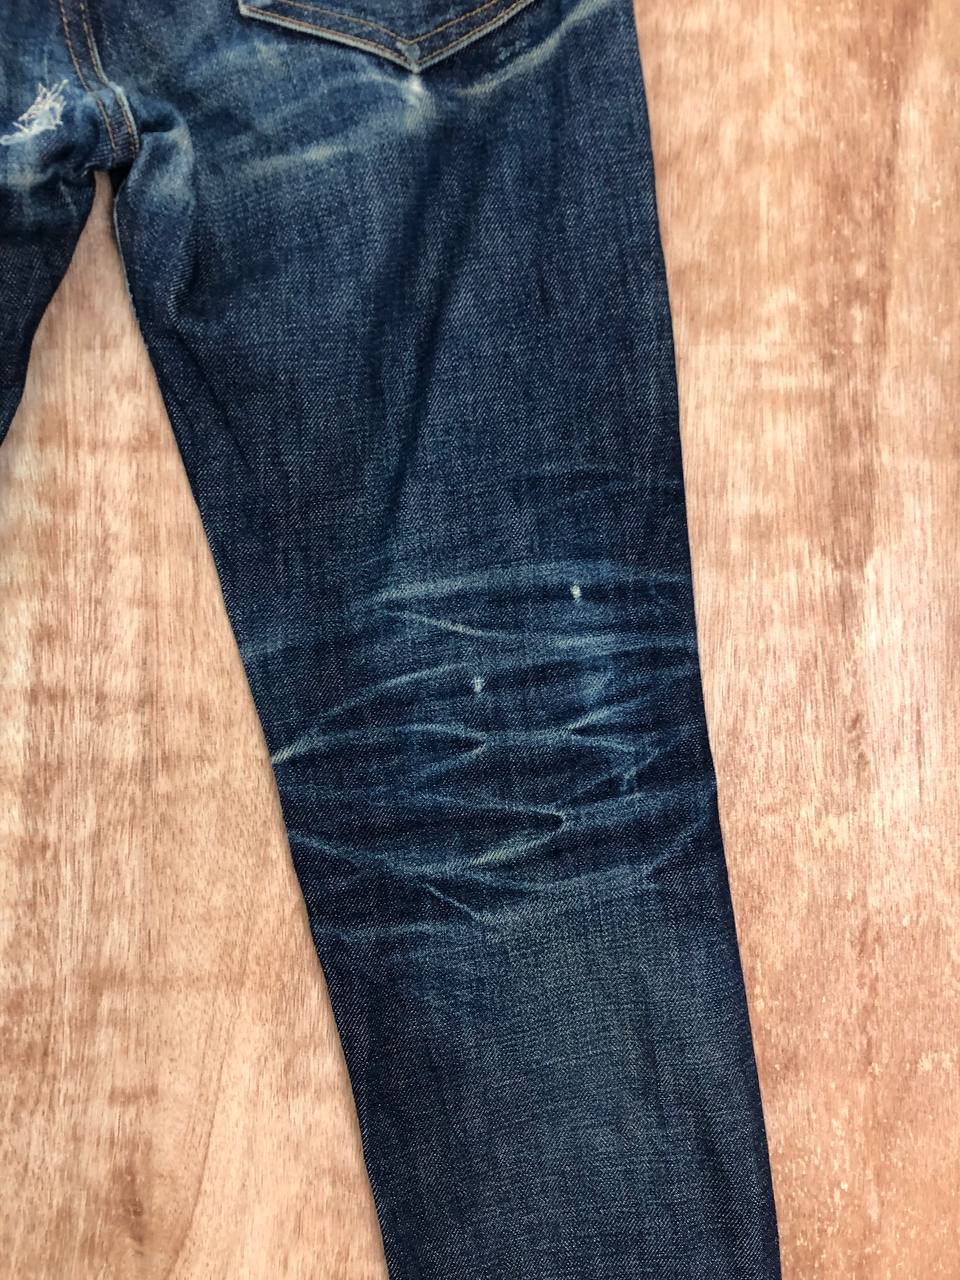 APC Petit Standard Jeans Distressed Selvedge - 15